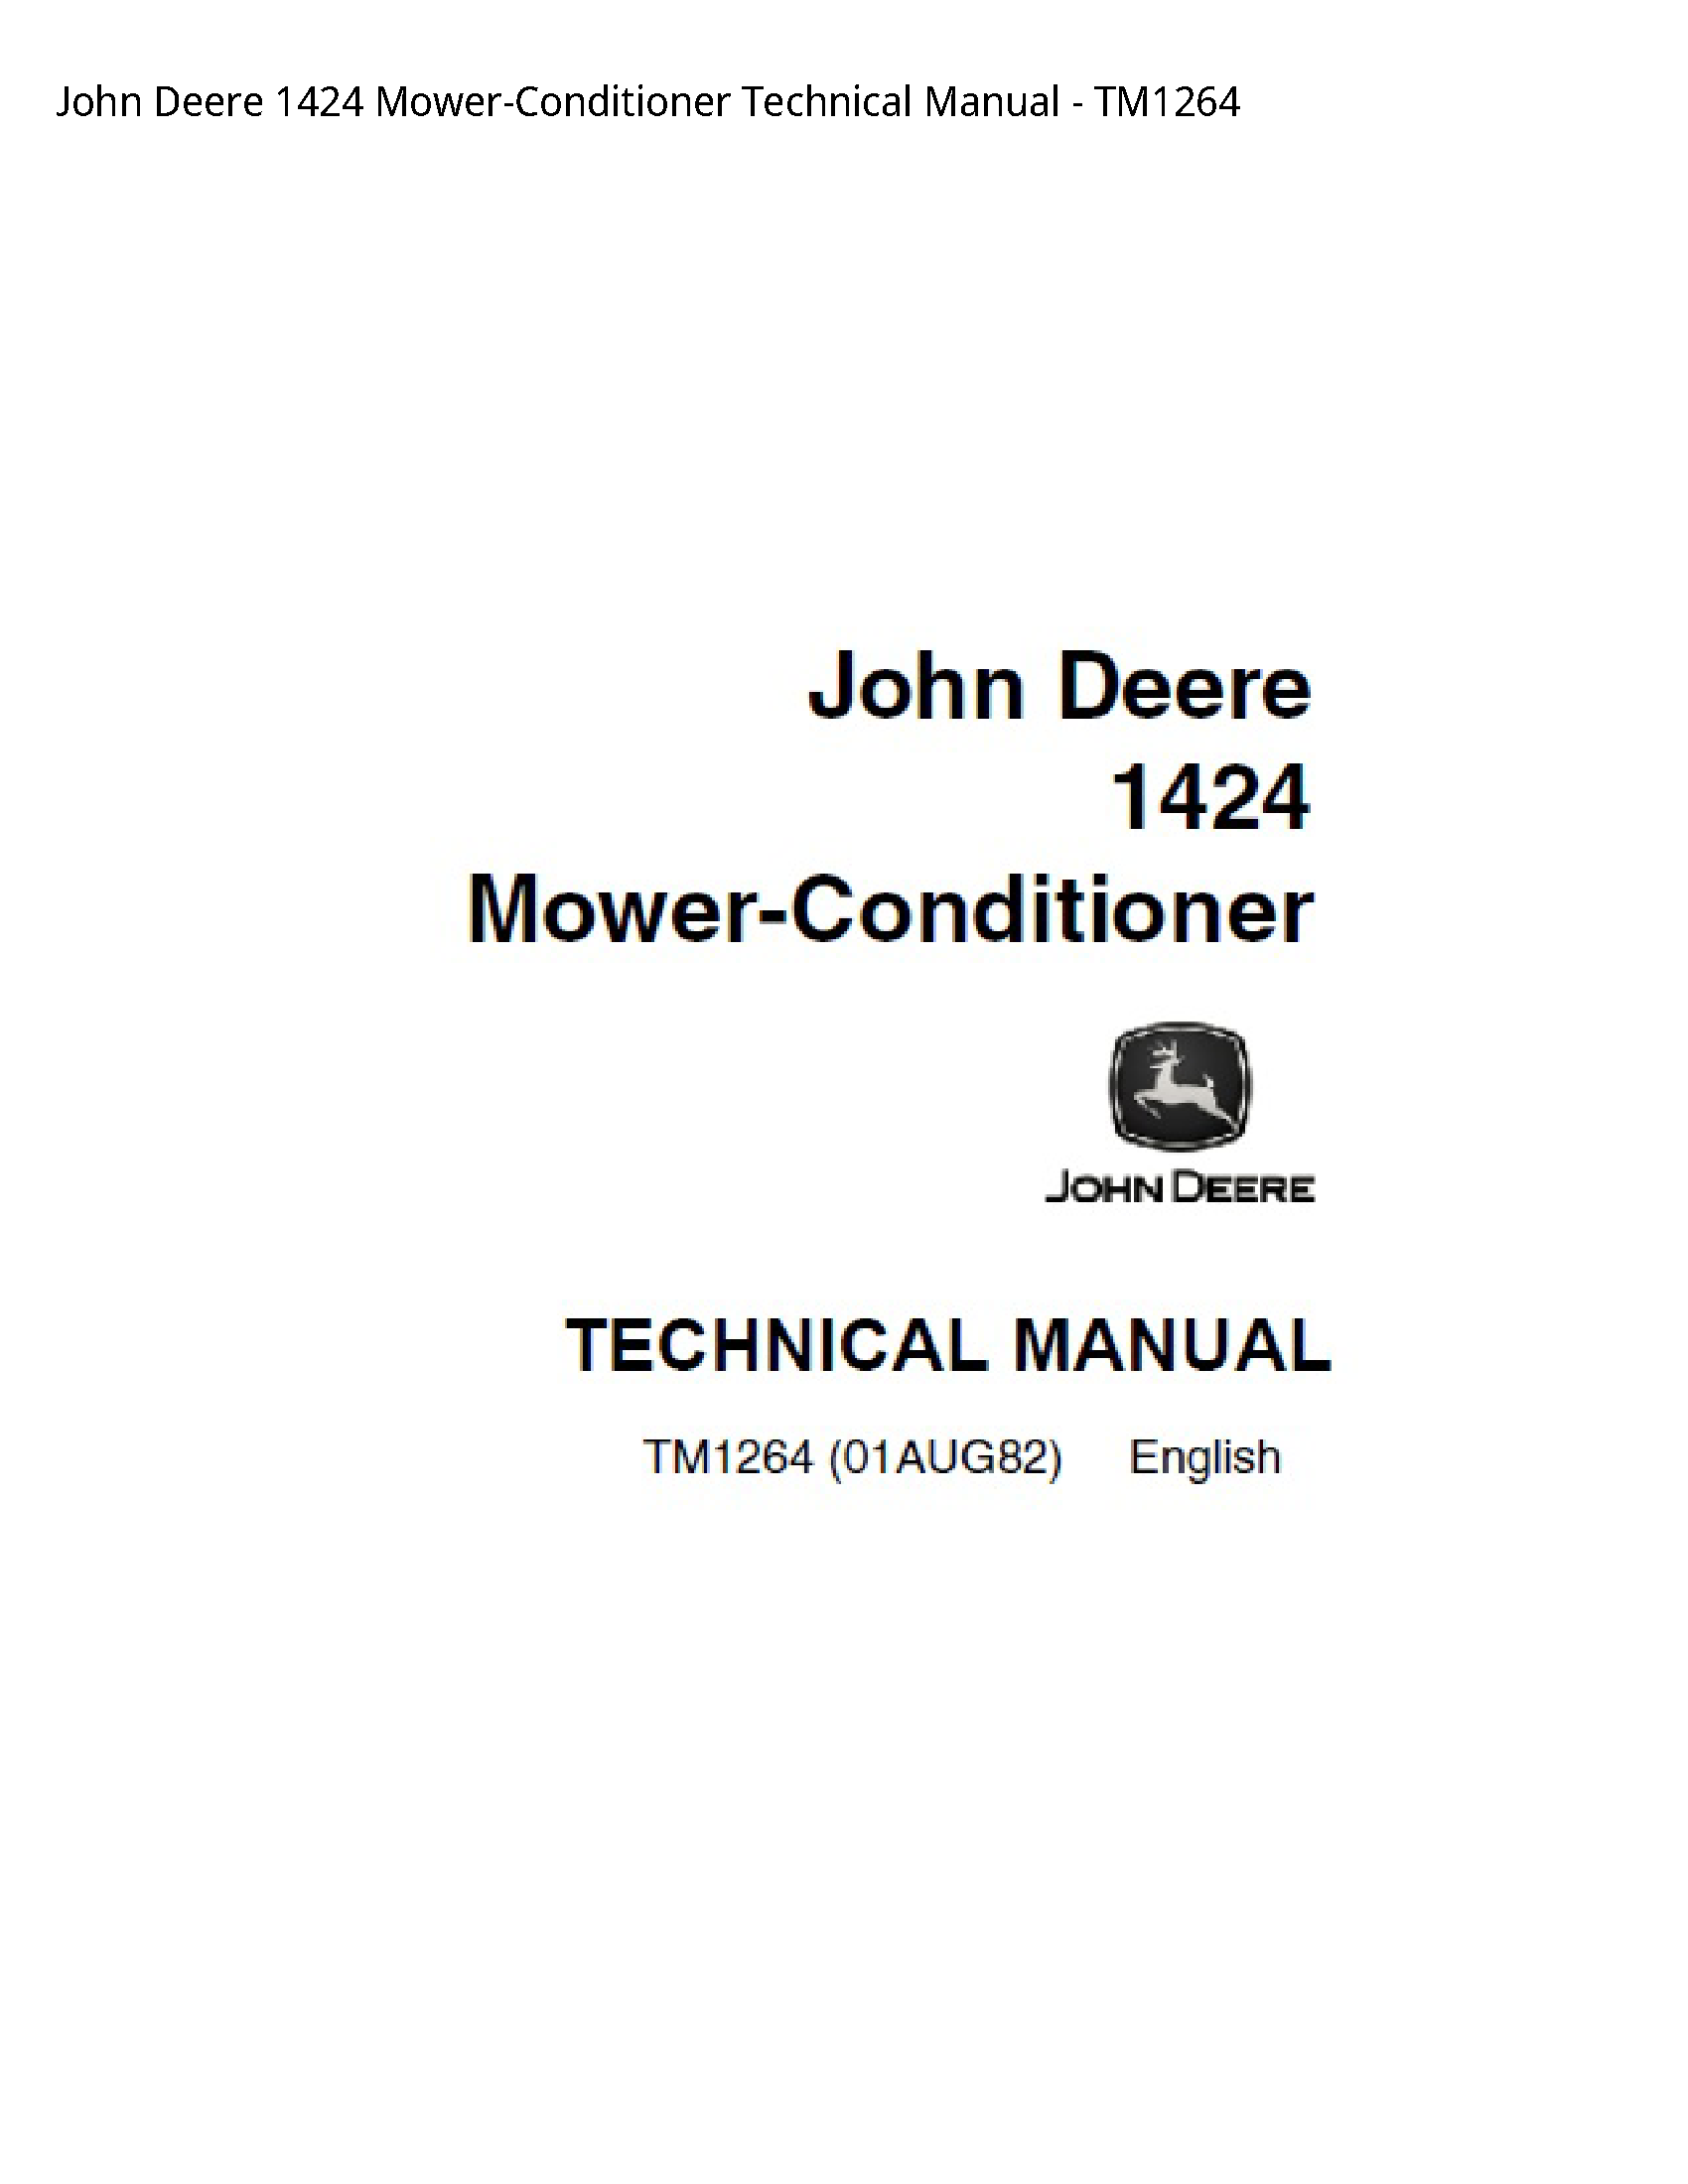 John Deere 1424 Mower-Conditioner Technical manual